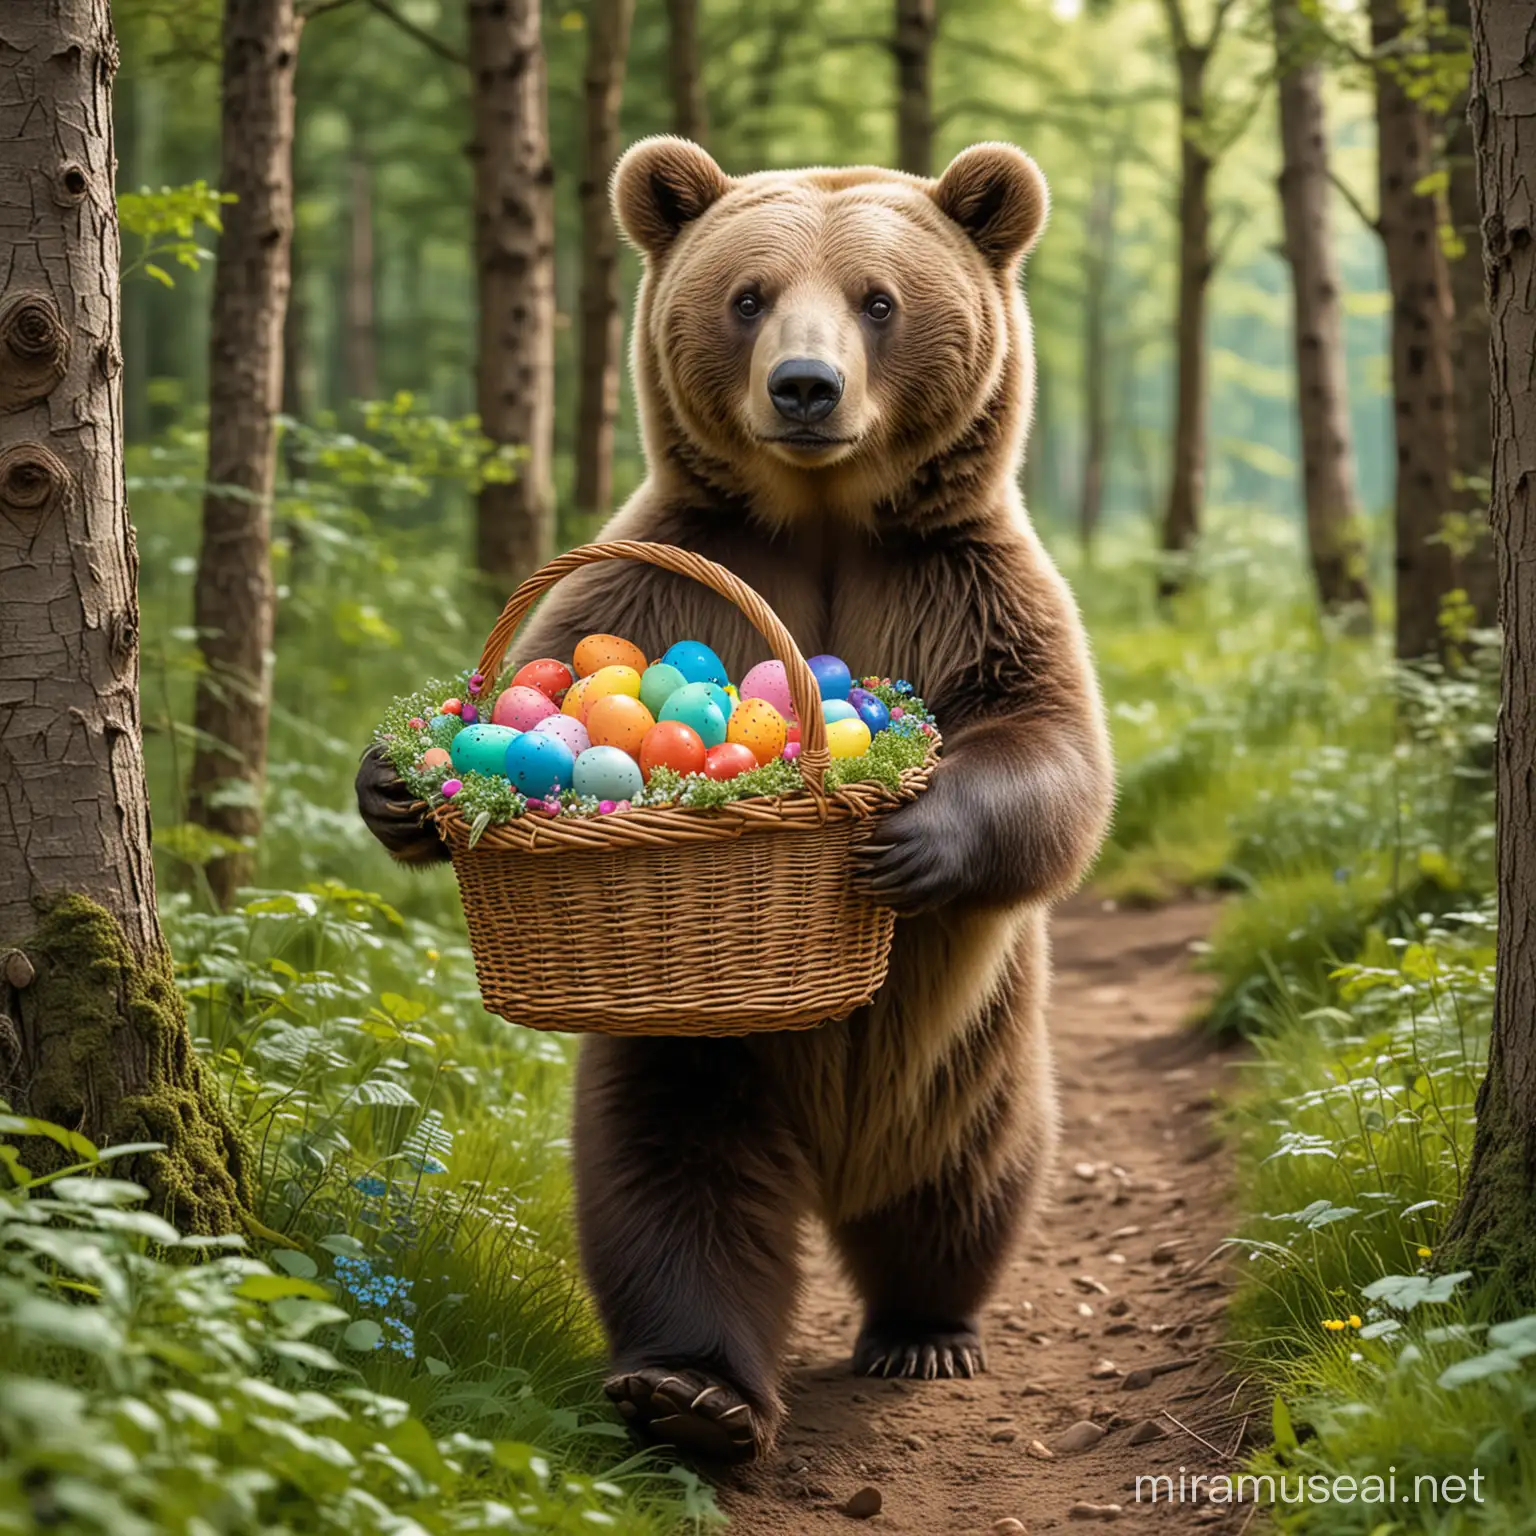 Cuddly Bear with Vivid Egg Basket Strolling Through Lush Forest